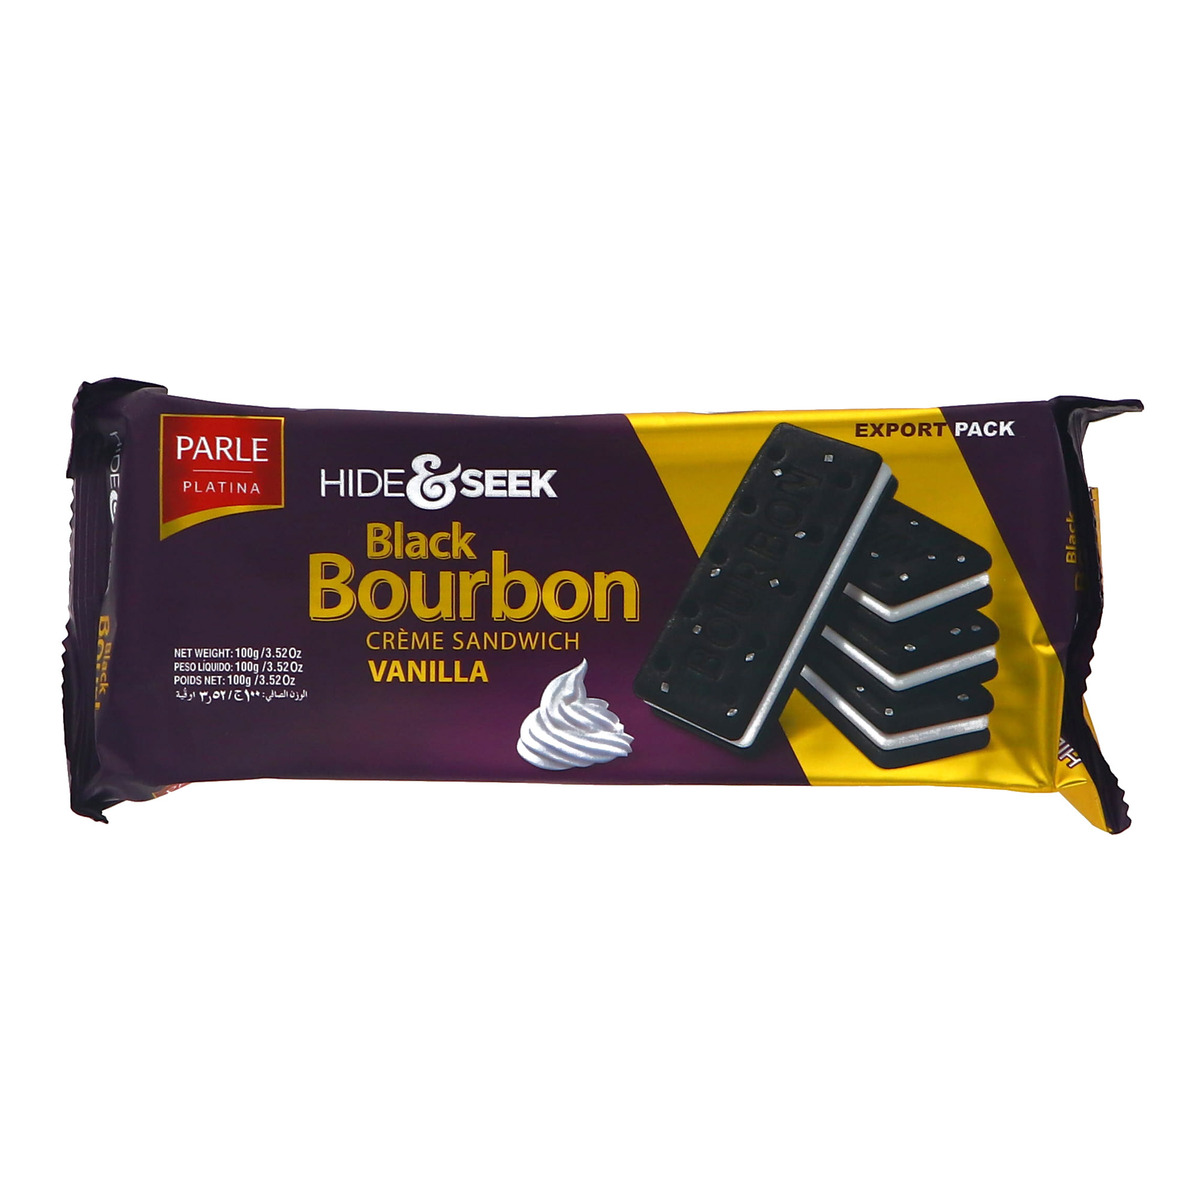 Parle Hide Seek Black Bourbon Creme Sandwich Vanilla 100g Plain Biscuits Lulu Ksa